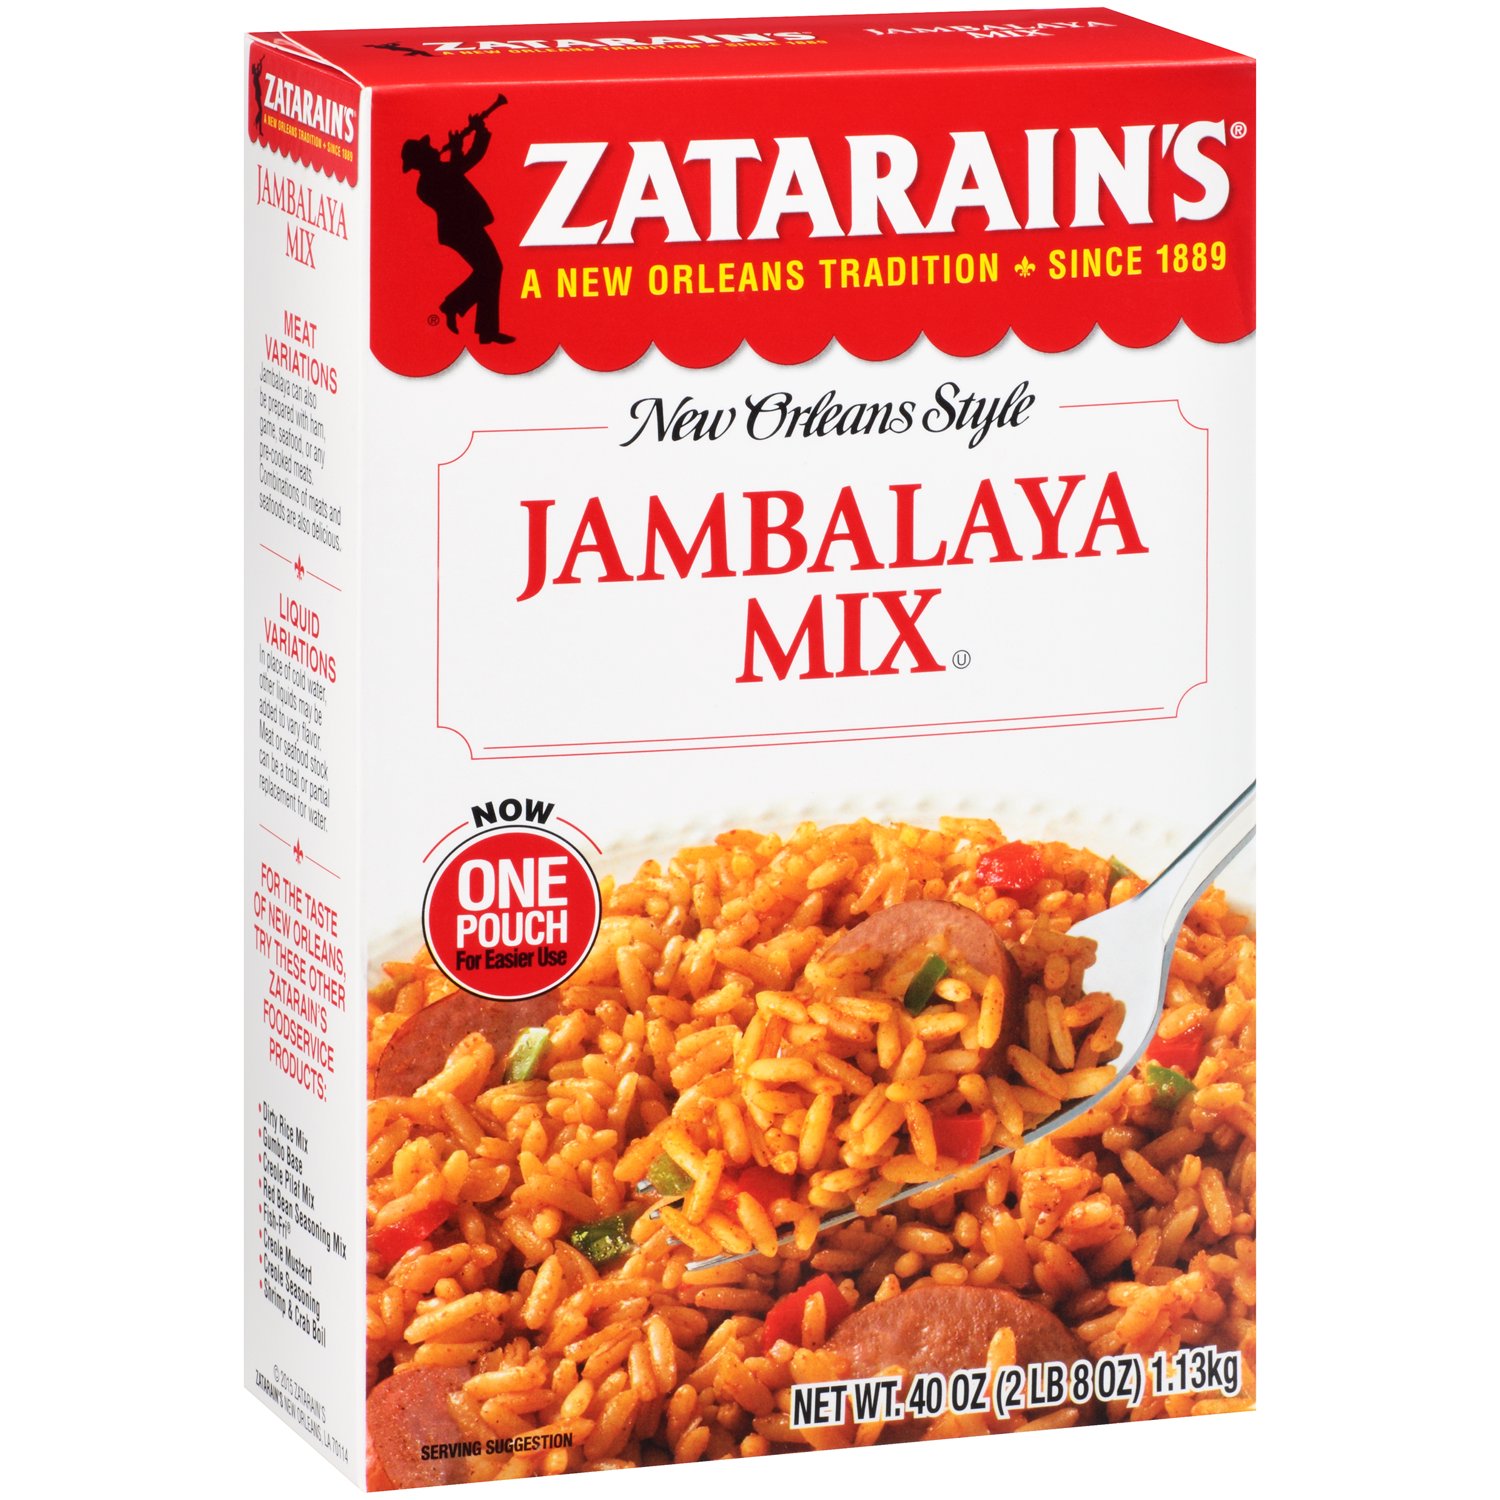 Zatarain's Jambalaya Mix, 40 oz - One 40 Ounce Box of Jambalaya Rice Mix, Perfect as a Stand-Alone Side or Signature Cajun Dish with Sausage, Chicken or Seafood - image 1 of 8